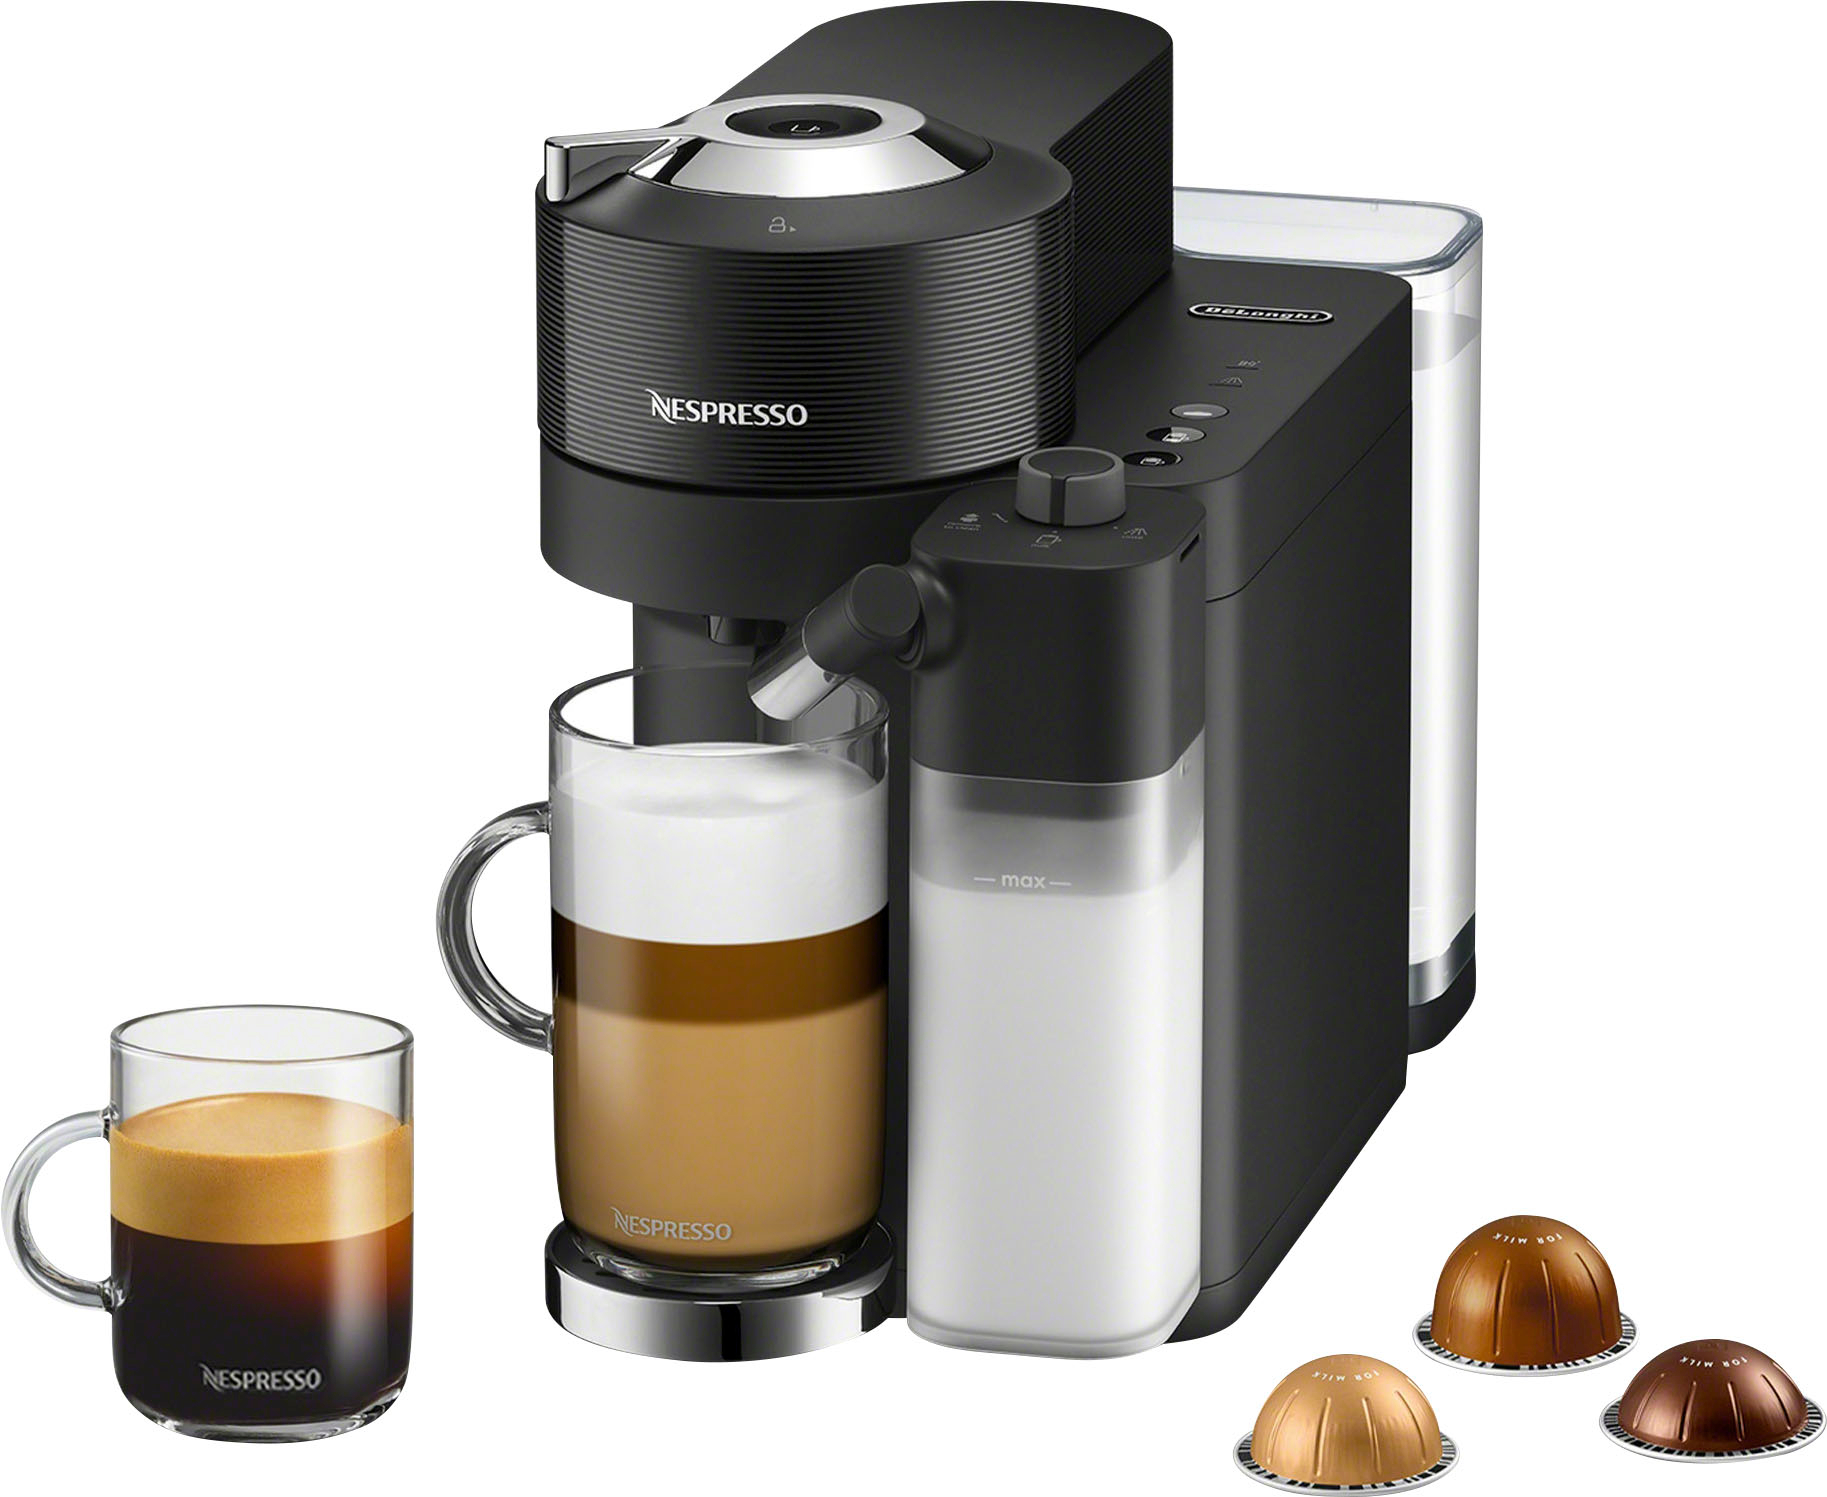 Nespresso Vertuo Next Premium Coffee and Espresso Machine by Breville with  Milk Frother, Black, Small